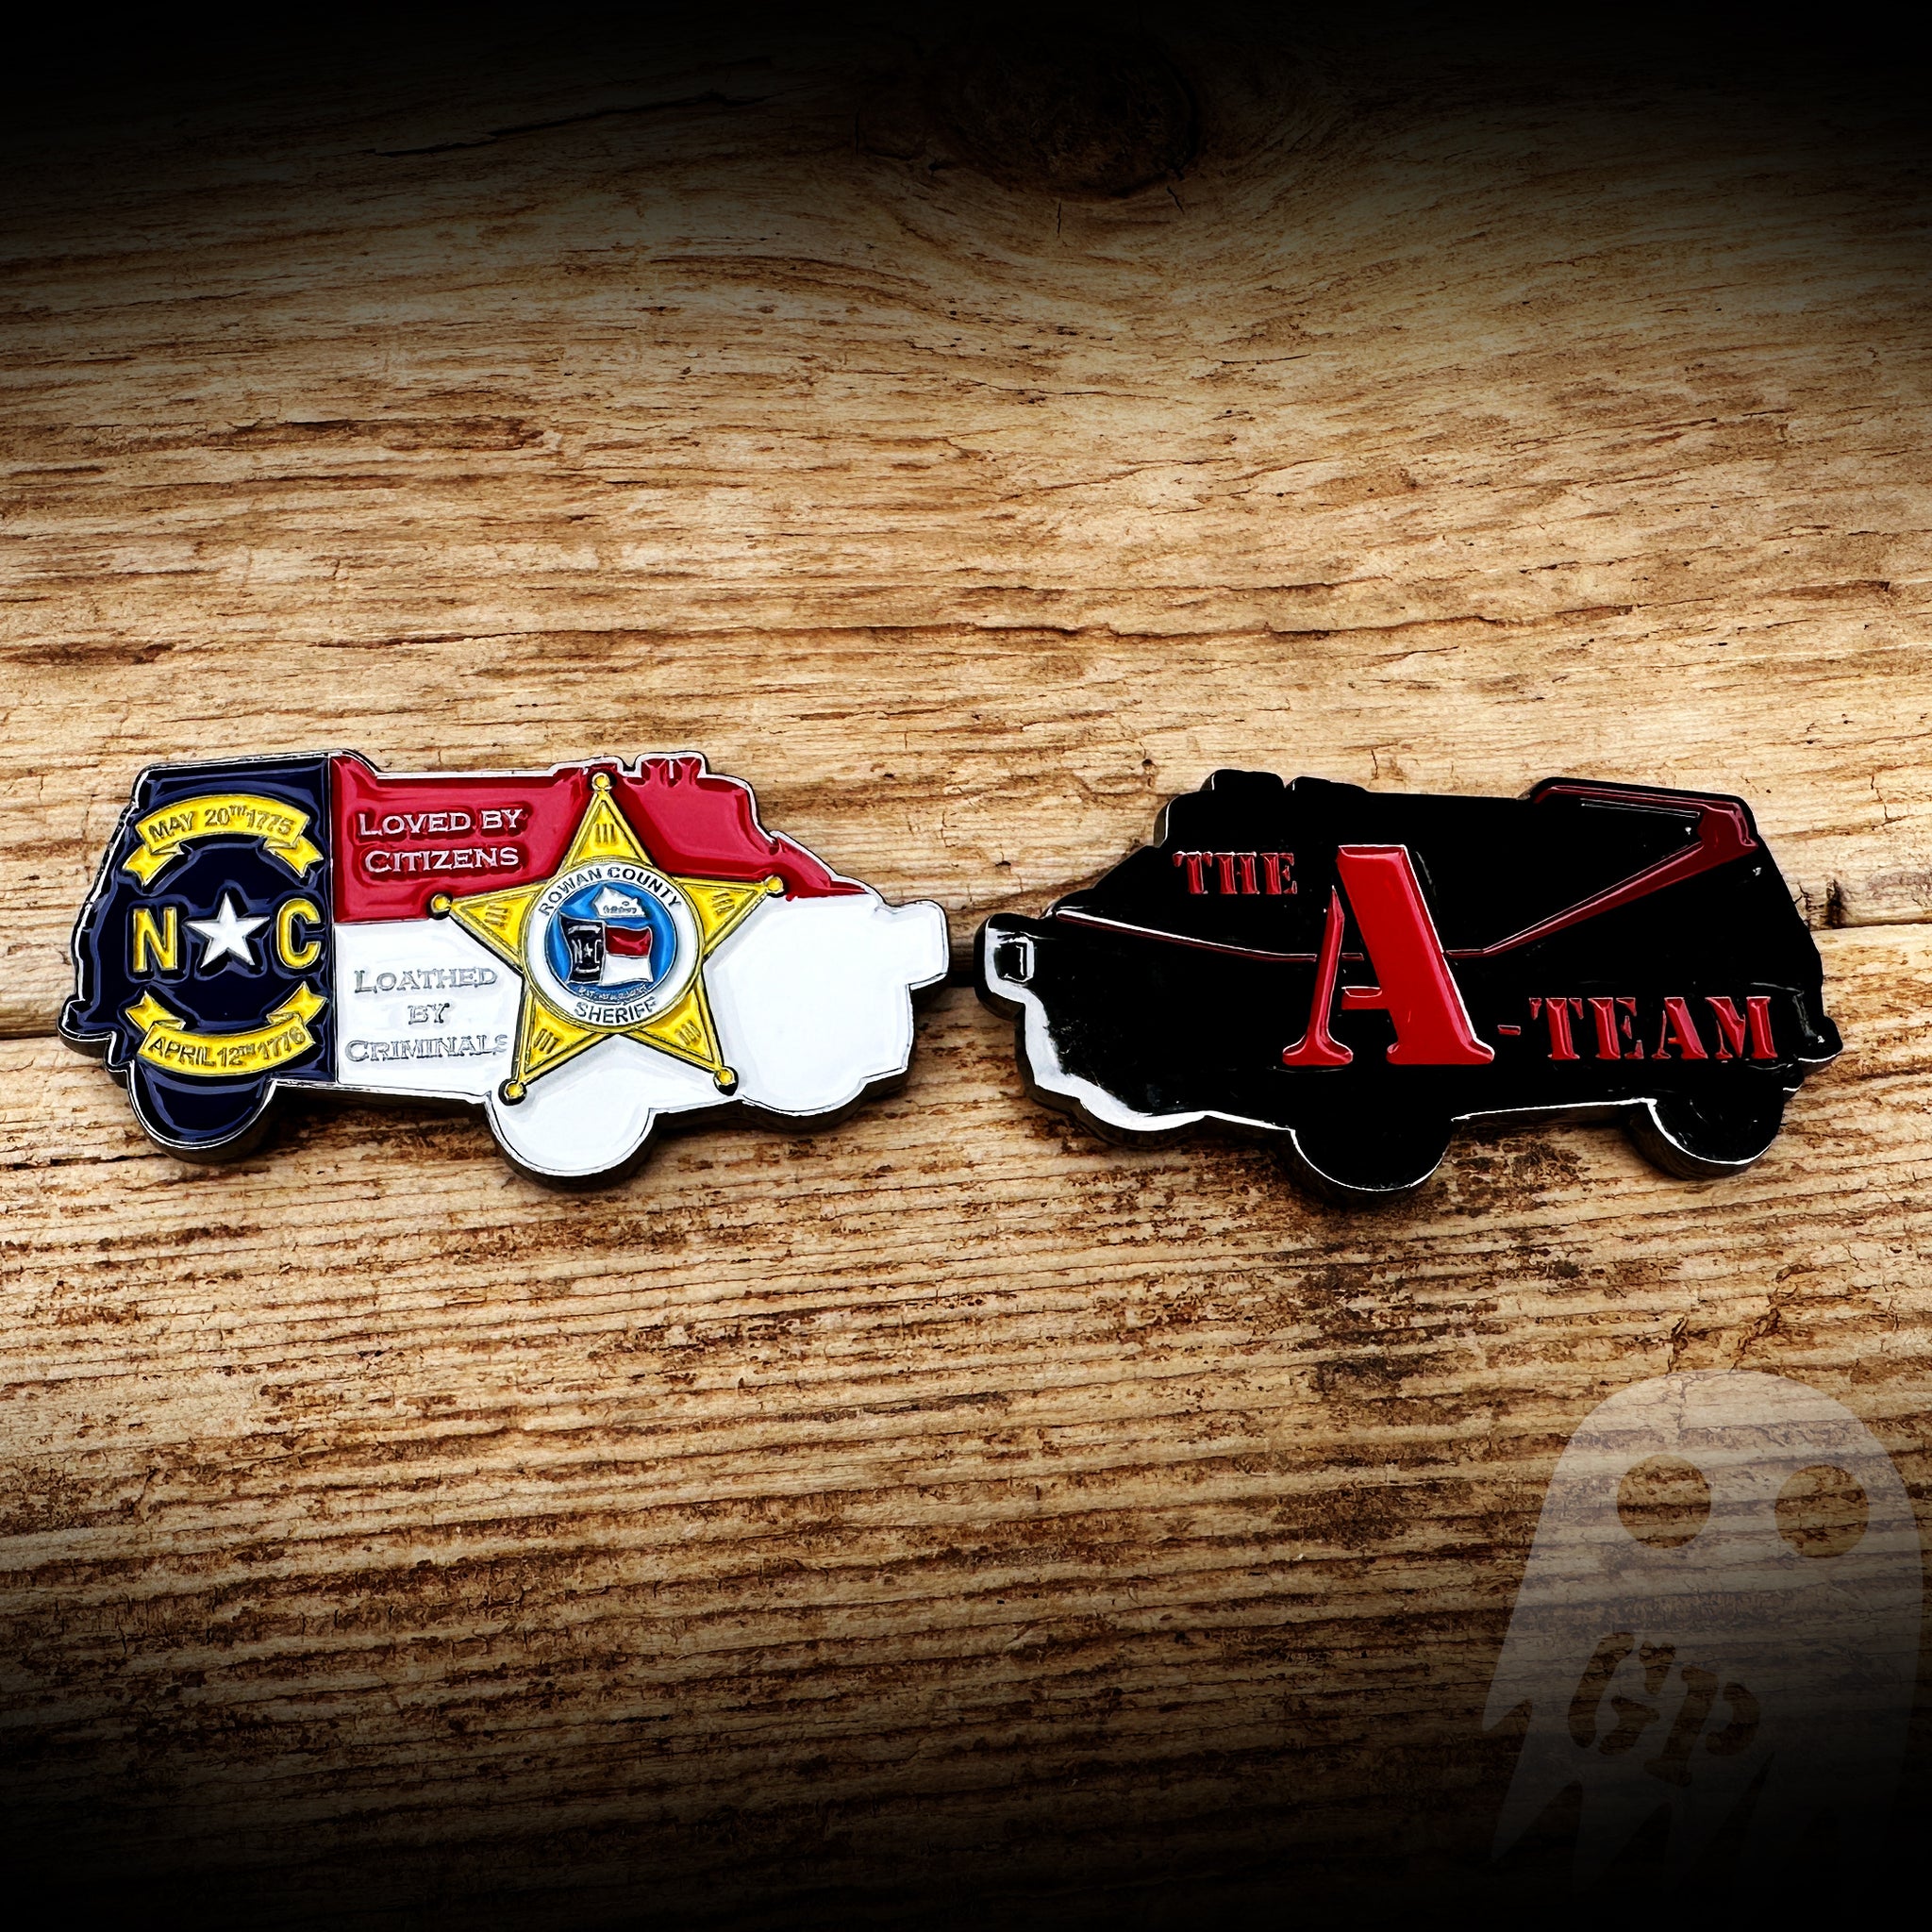 A-Team - Rowan County, NC Sheriff's Office A-Team Coin - Authentic